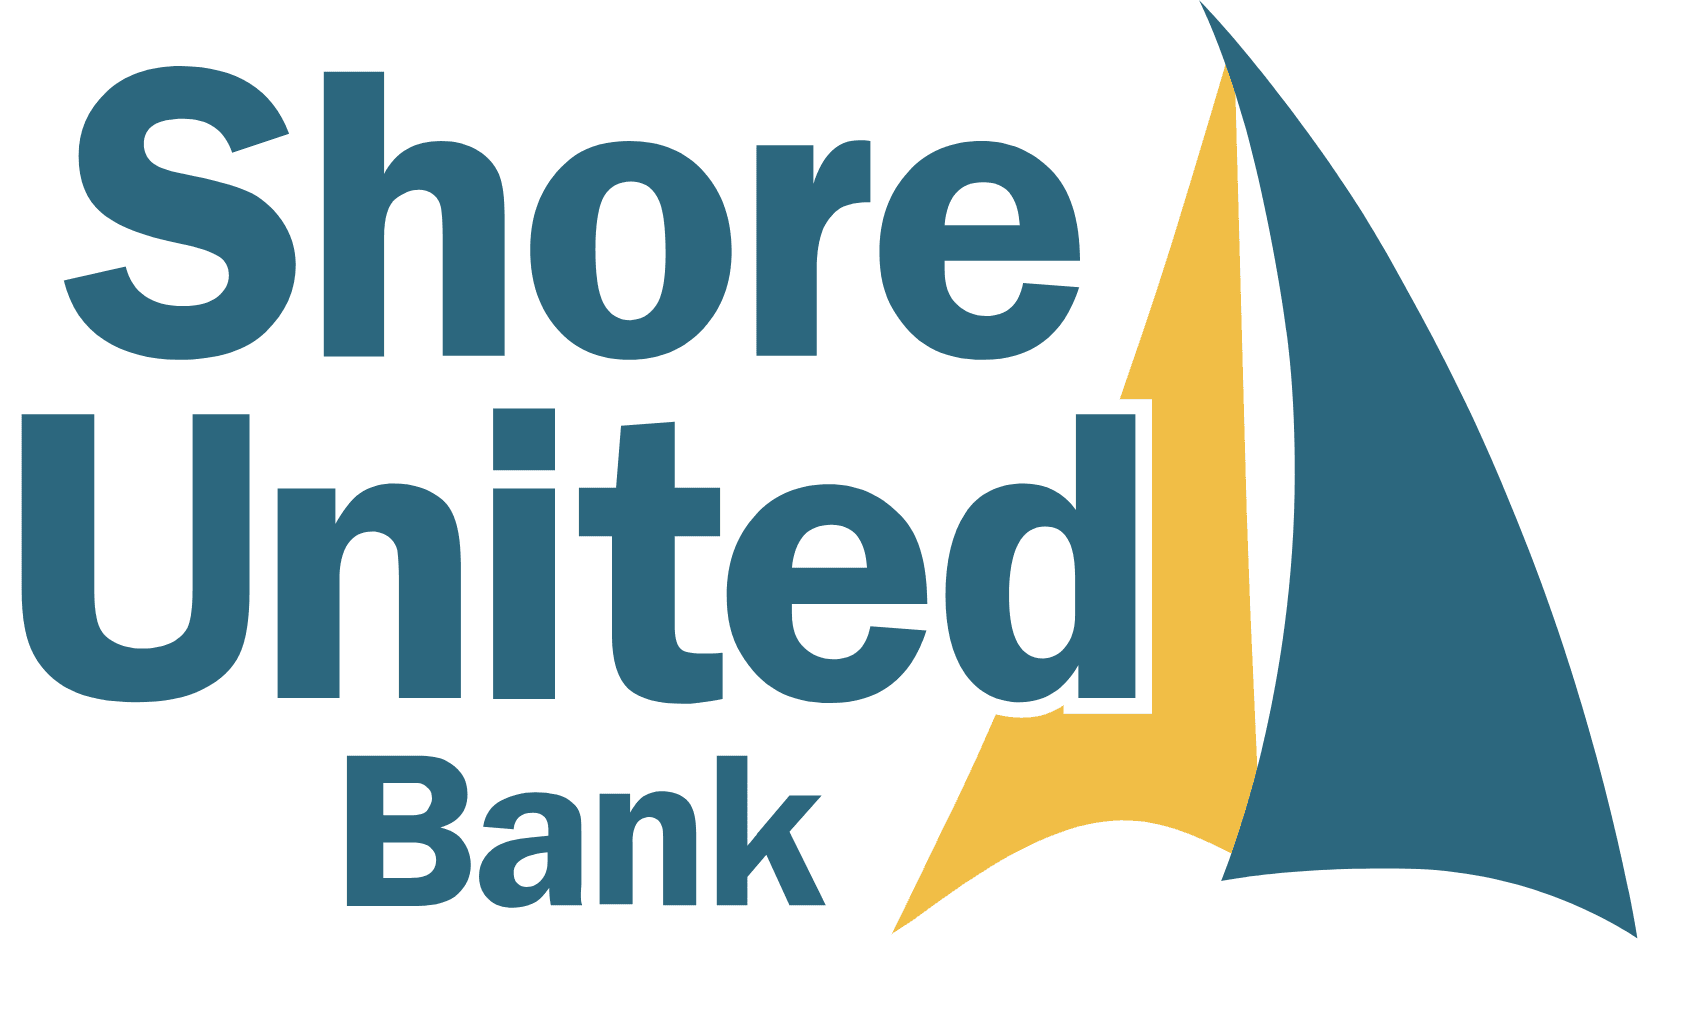 Shore United Bank